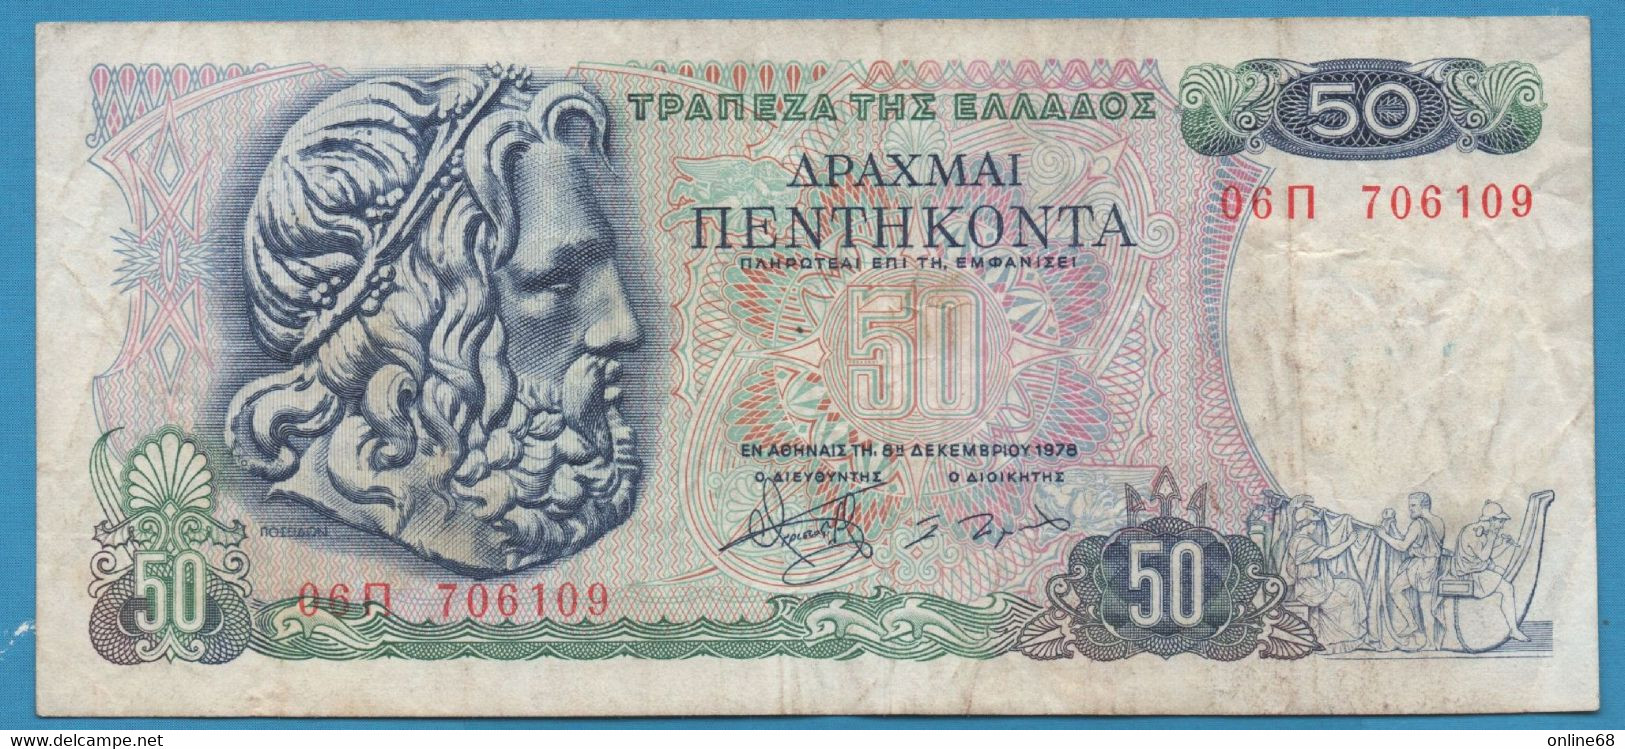 GREECE 50 DRACHMAI 08.12.1978 # 06Π 706109 F# 199 Poseidon - Greece